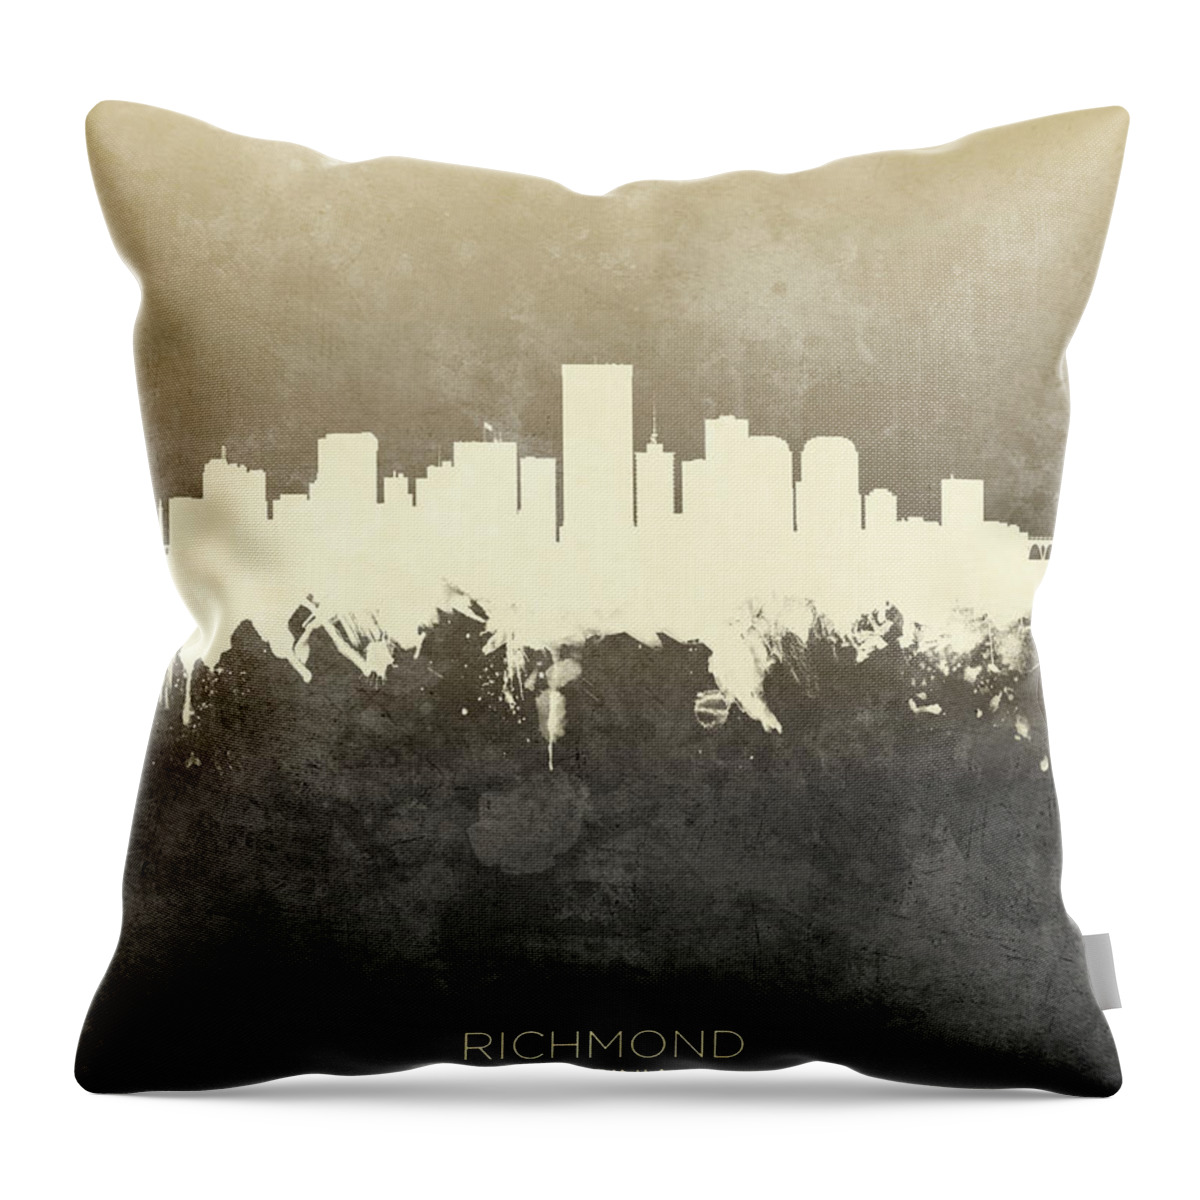 Richmond Throw Pillow featuring the digital art Richmond Virginia Skyline by Michael Tompsett